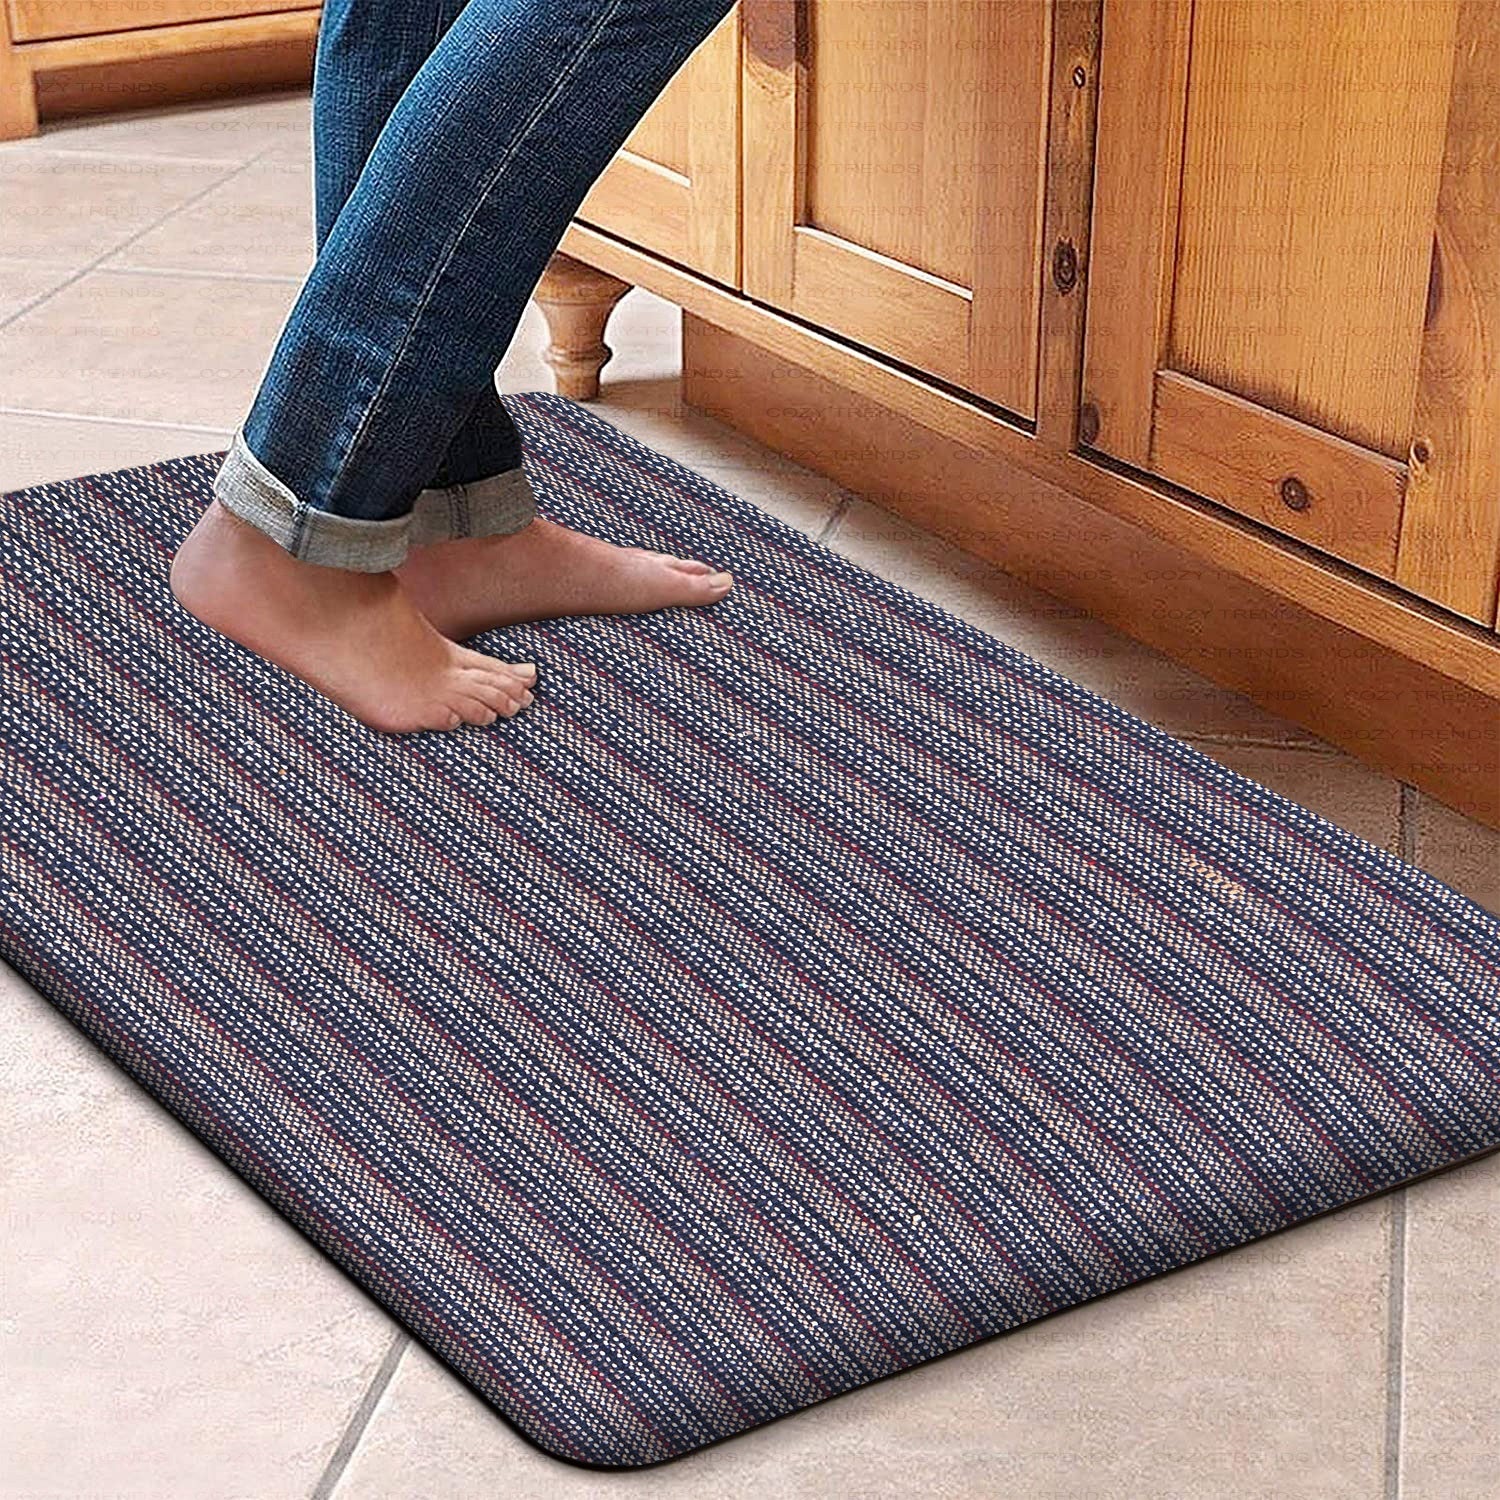 Kitchen Floor Mat Rug Washable Non-Slip Non-Skid Large Durable  Multi-Purpose NEW